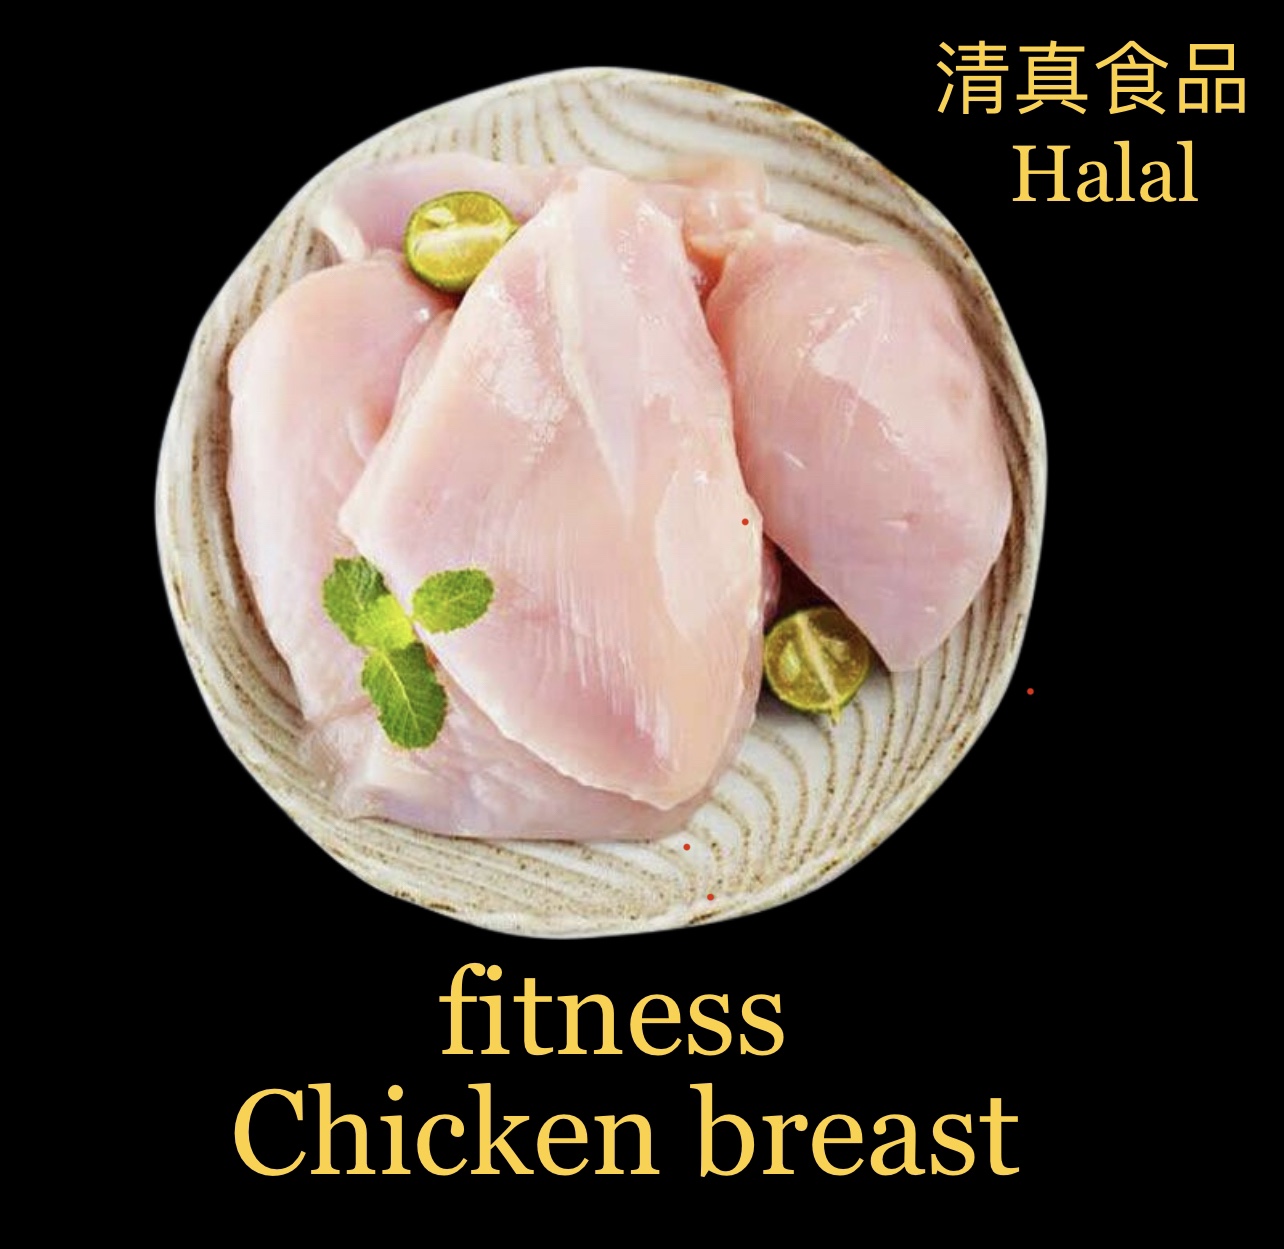 Halal Chicken breast Raw冷冻清真脯肉鸡胸肉 10kg整箱包邮-封面